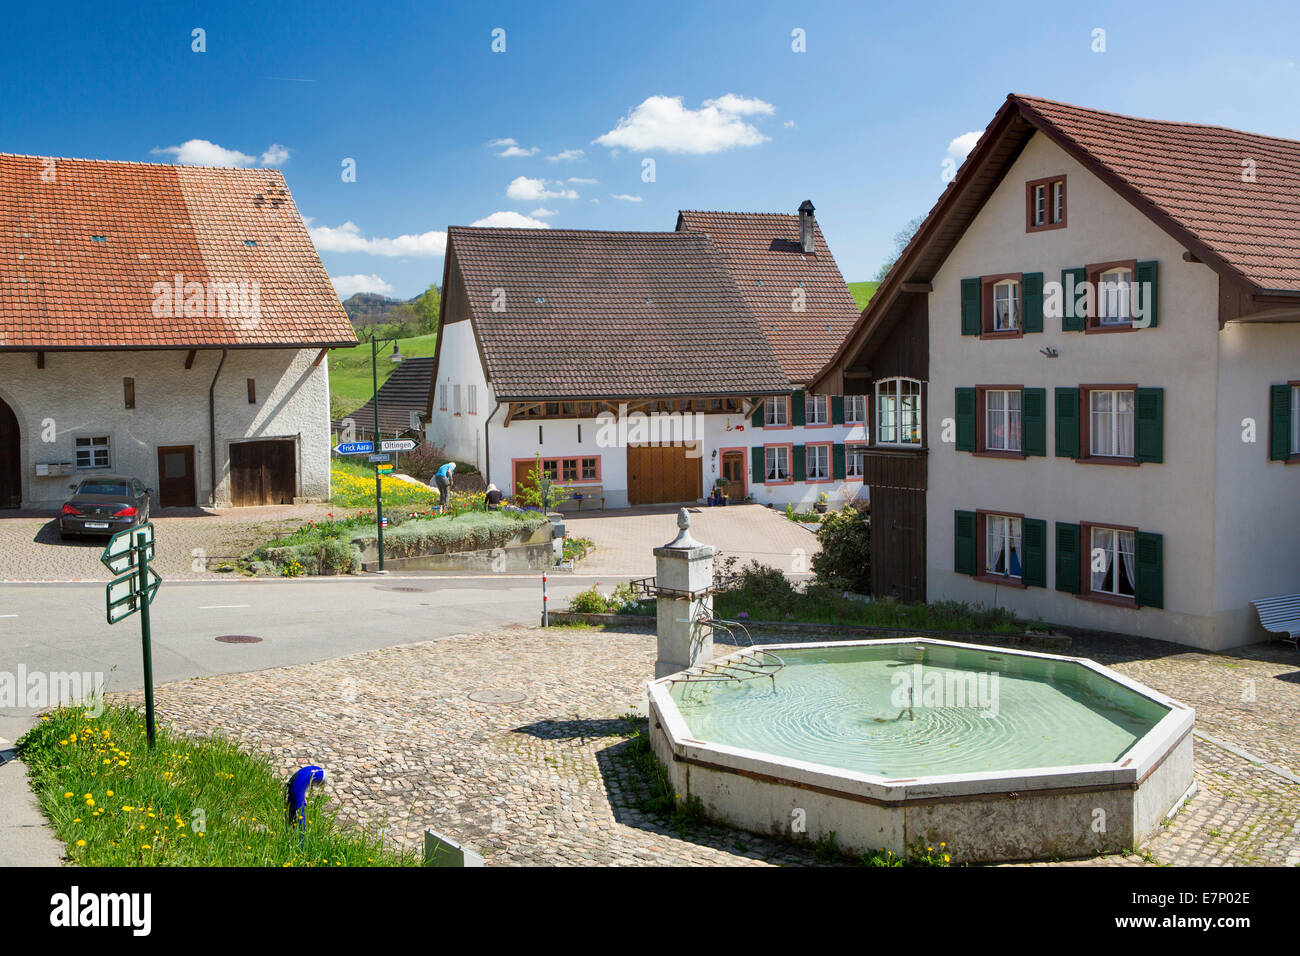 Anwil, muelle, cantón, tierra de Basilea, aldea Suiza, Europa Foto de stock